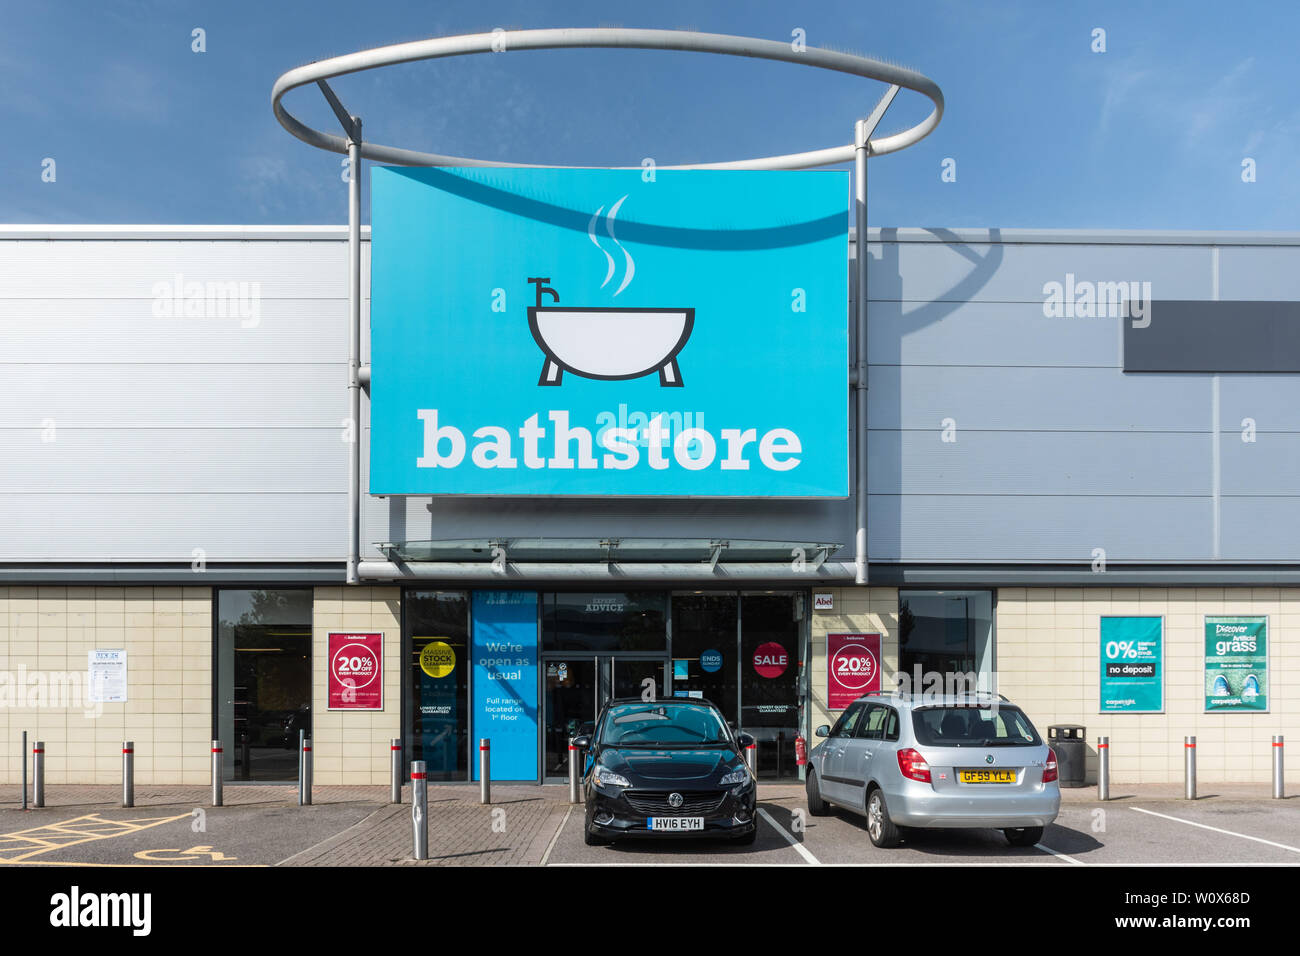 Bathstore shop front, a specialist bathroom retailer Stock Photo